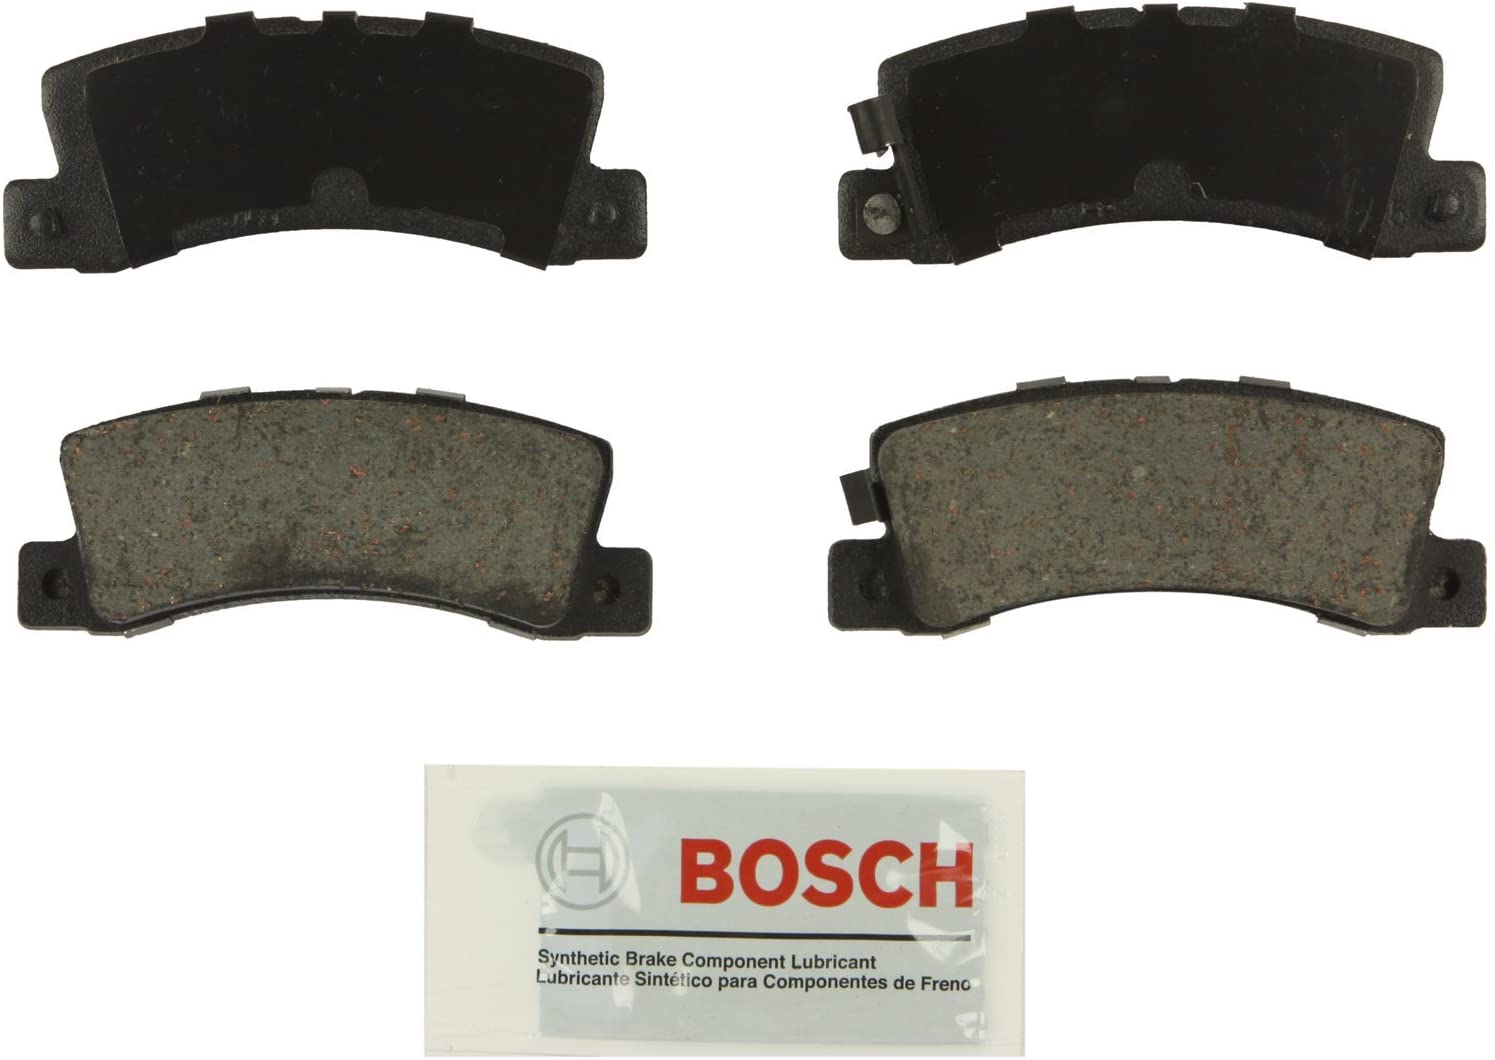 Bosch BE325 Blue Disc Brake Pad Set for Lexus: 1990-91 ES250, 1992-99 ES300, 1999-03 RX300; Toyota: 1987-99 Camry, 1986-95 Celica, 1999 Solara - REAR